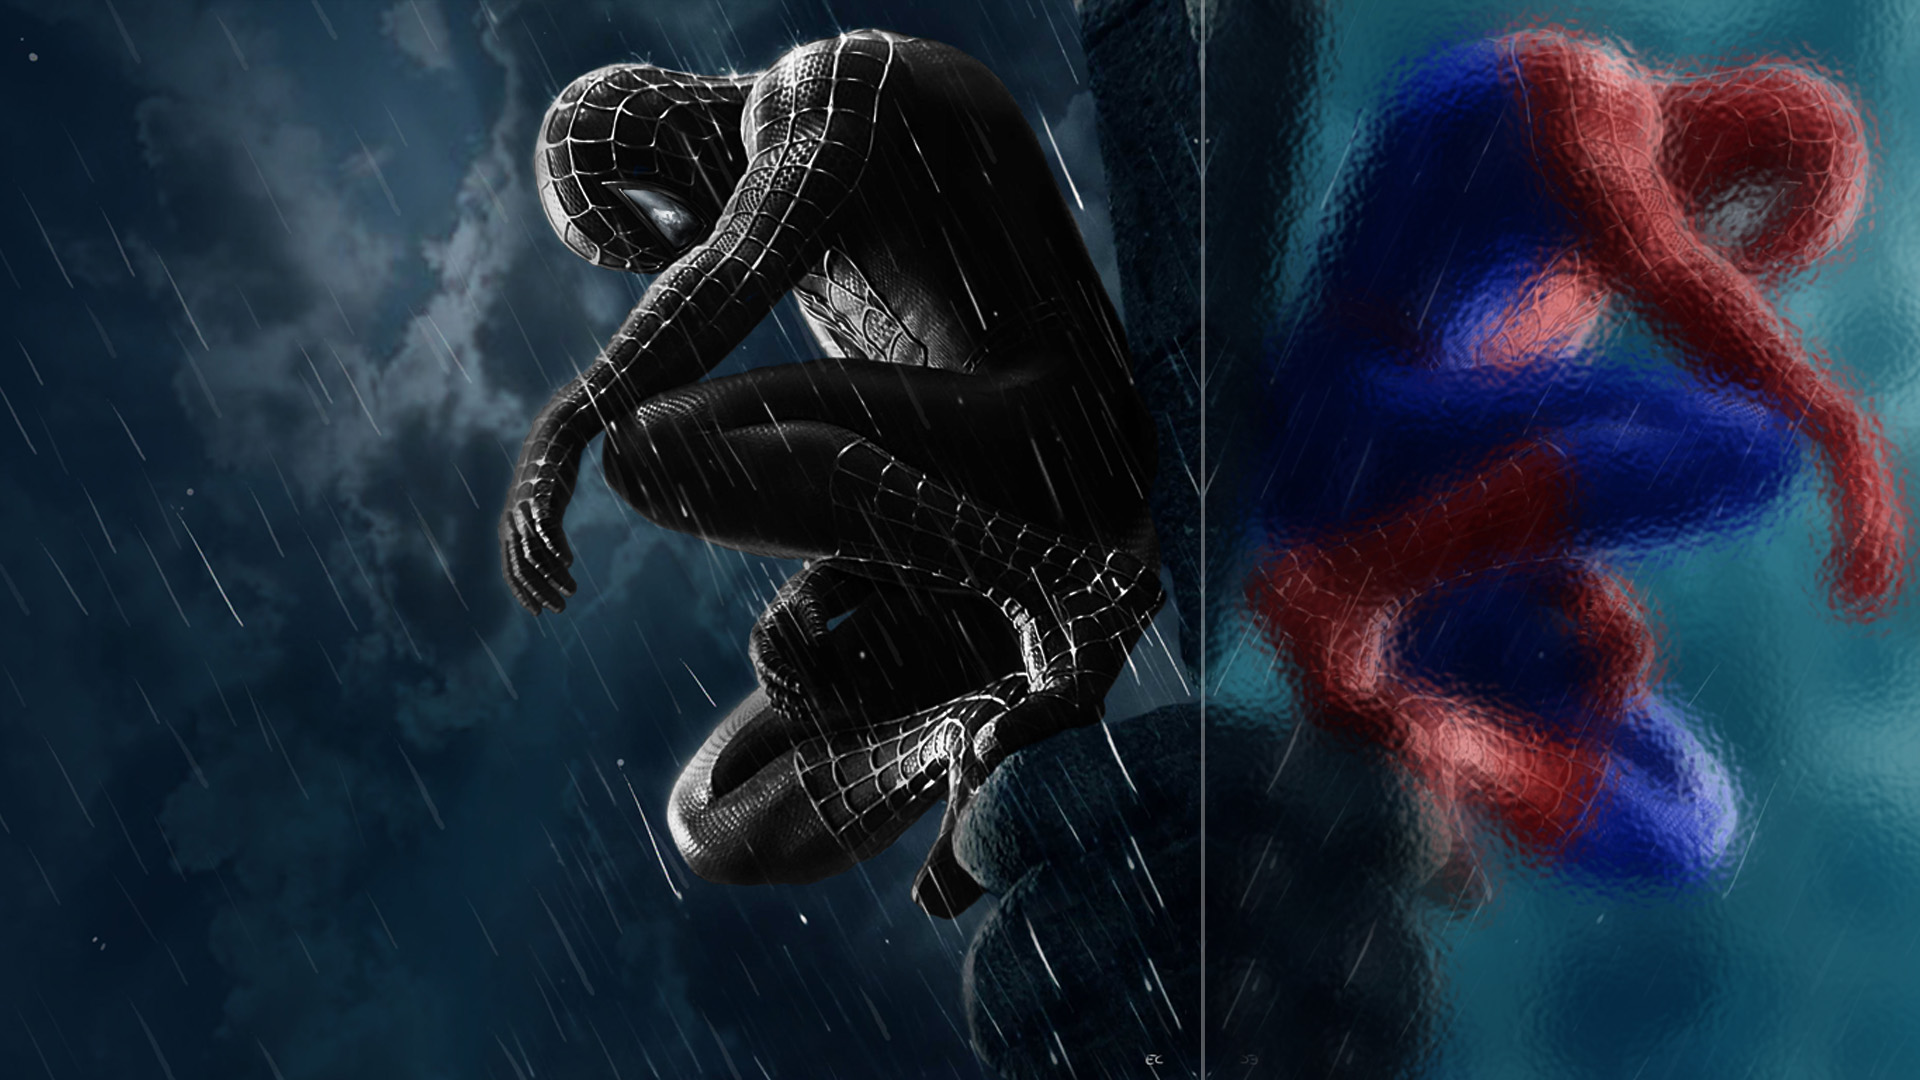 Black Spiderman Wallpaper Free with HD Wallpaper - Kemecer.com